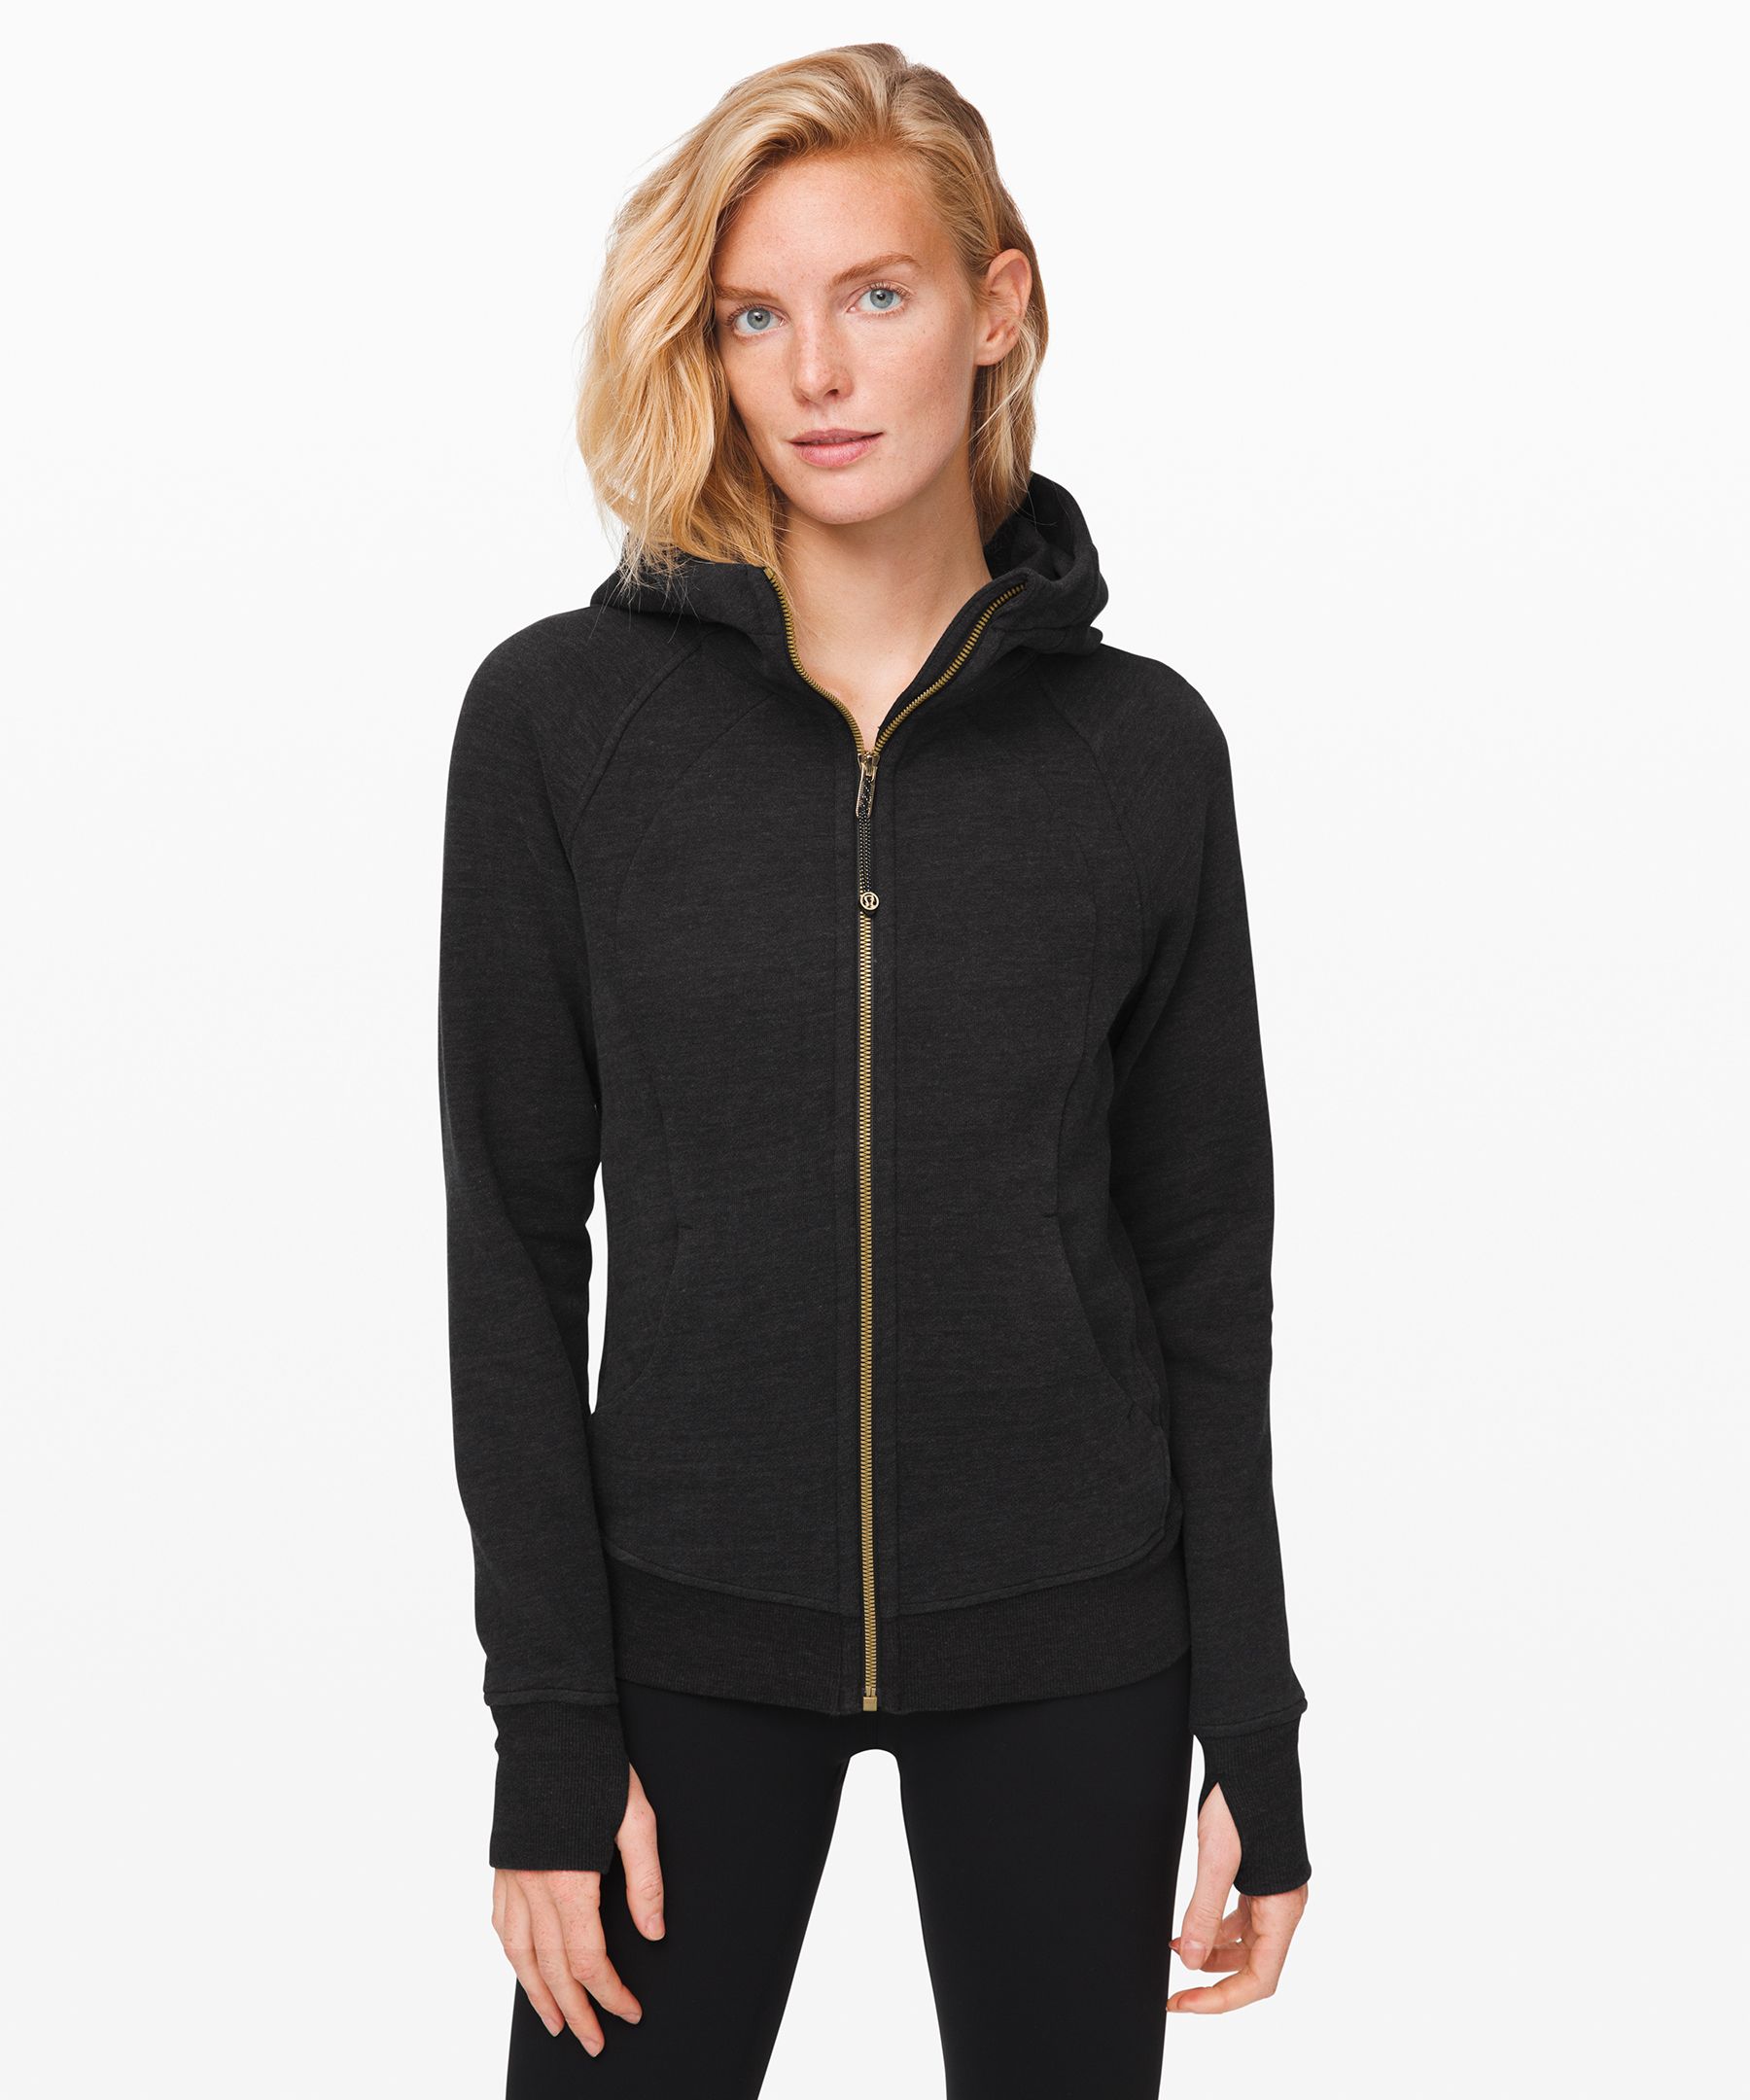 LULULEMON heathered speckled black scuba full zip hoodie jacket